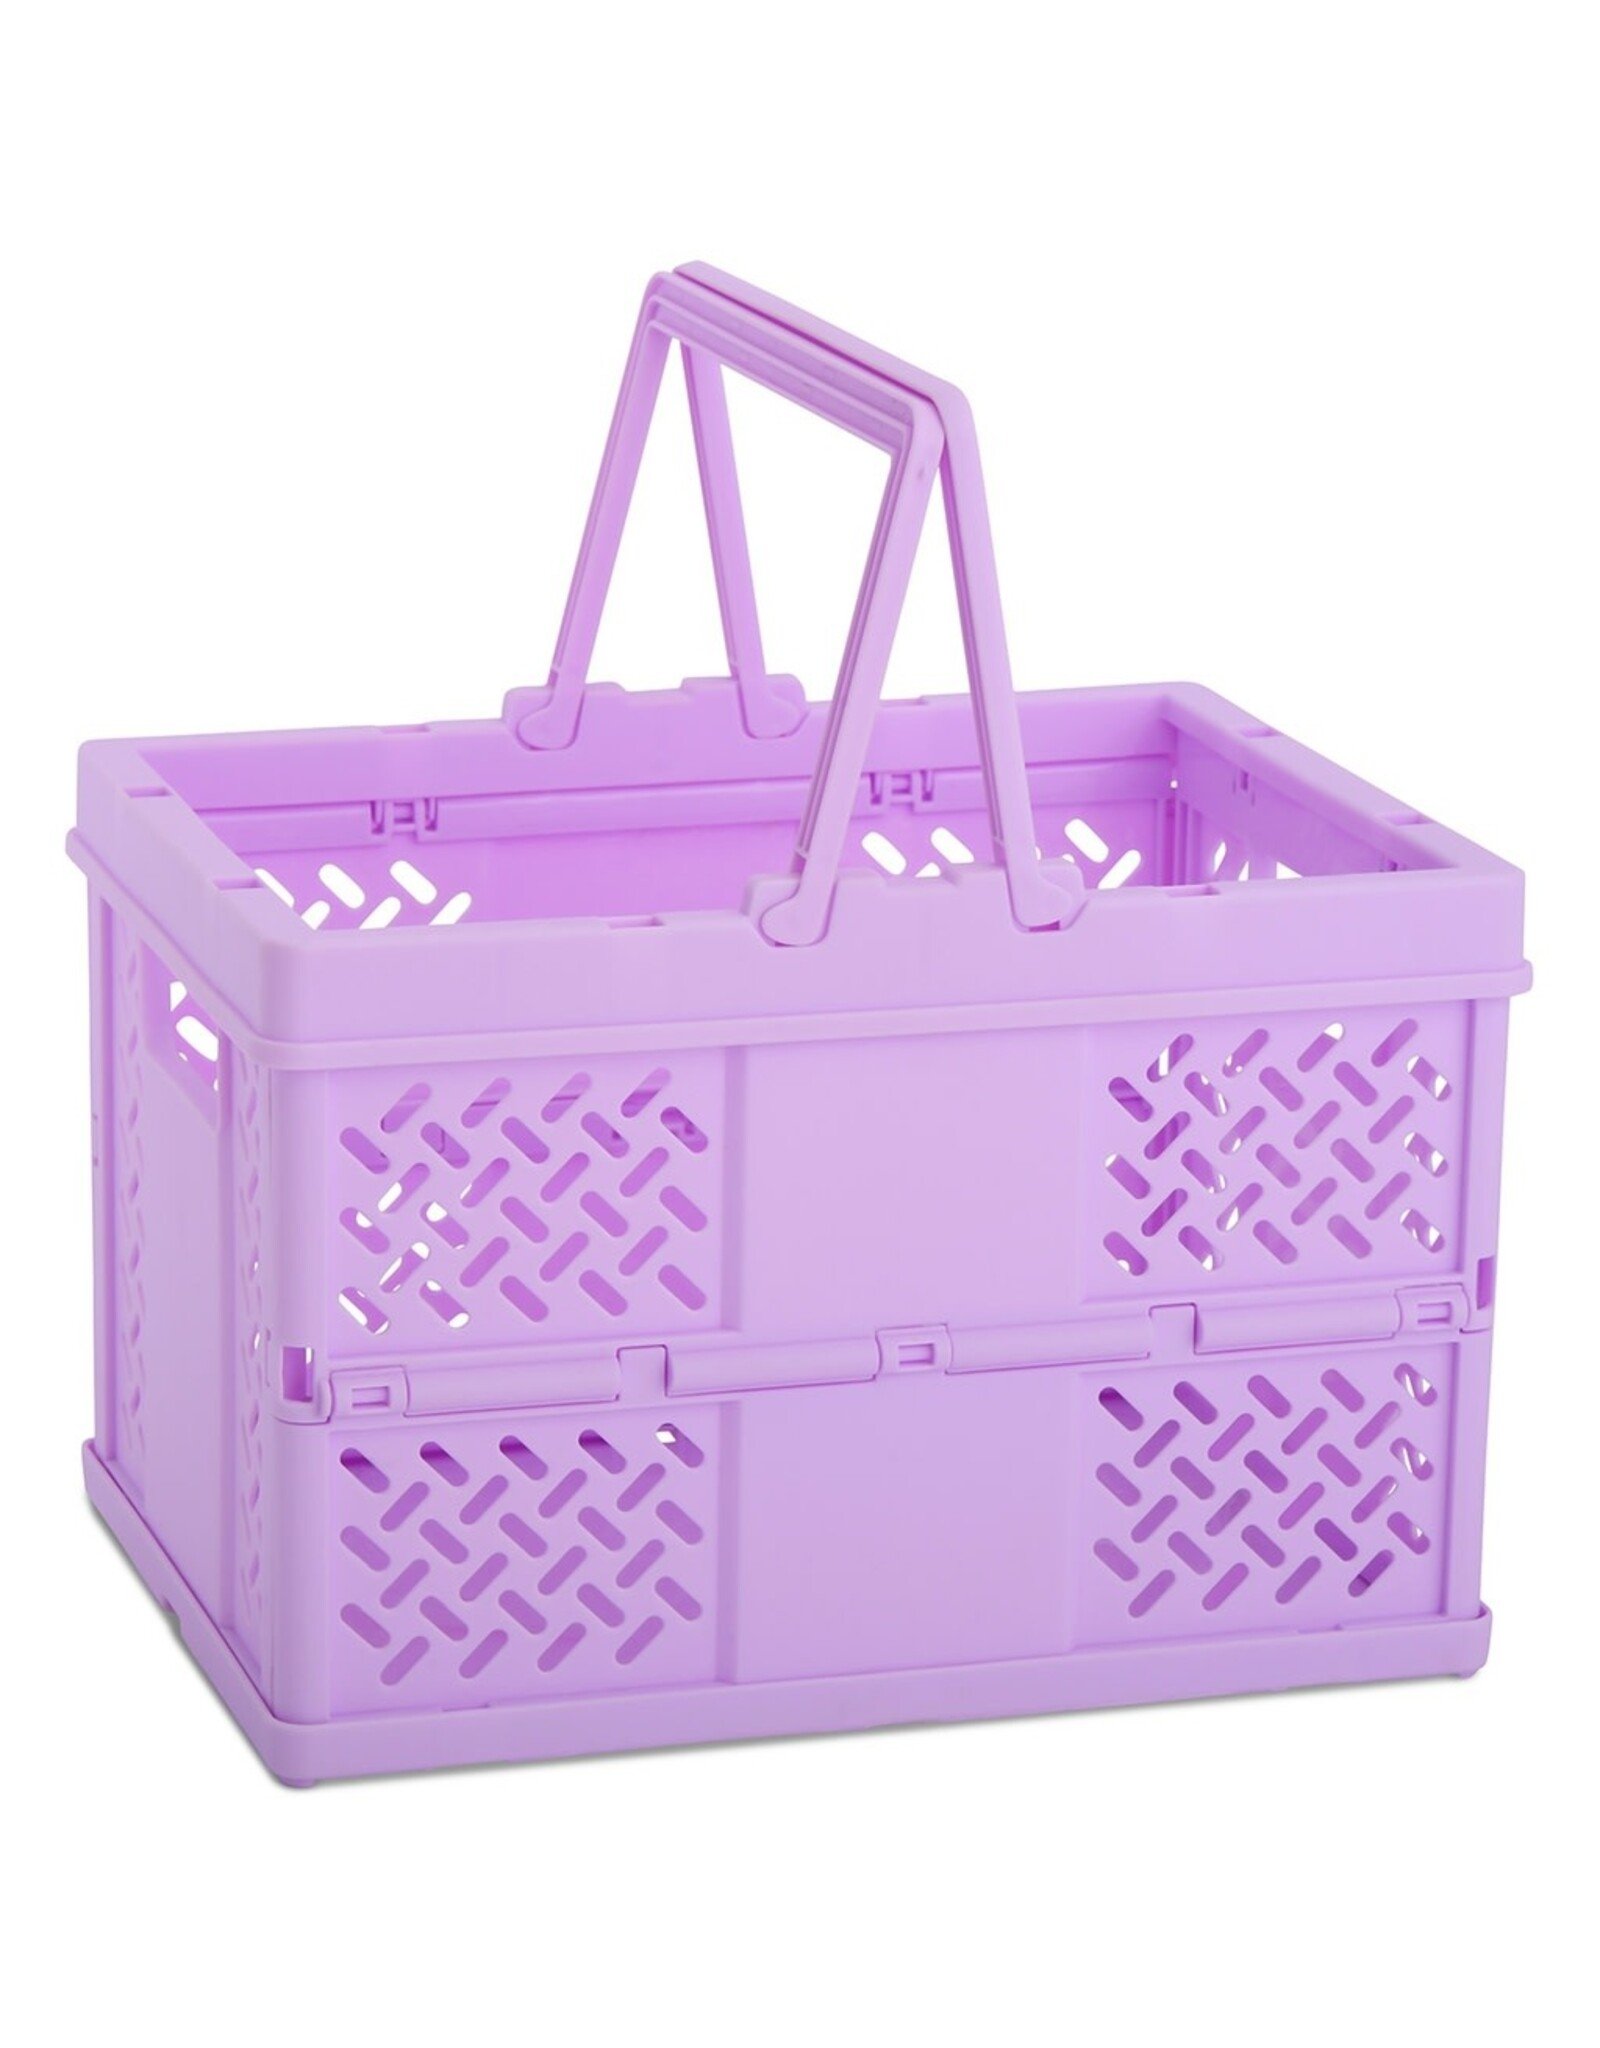 Iscream Small Lavender Foldable Storage Crate